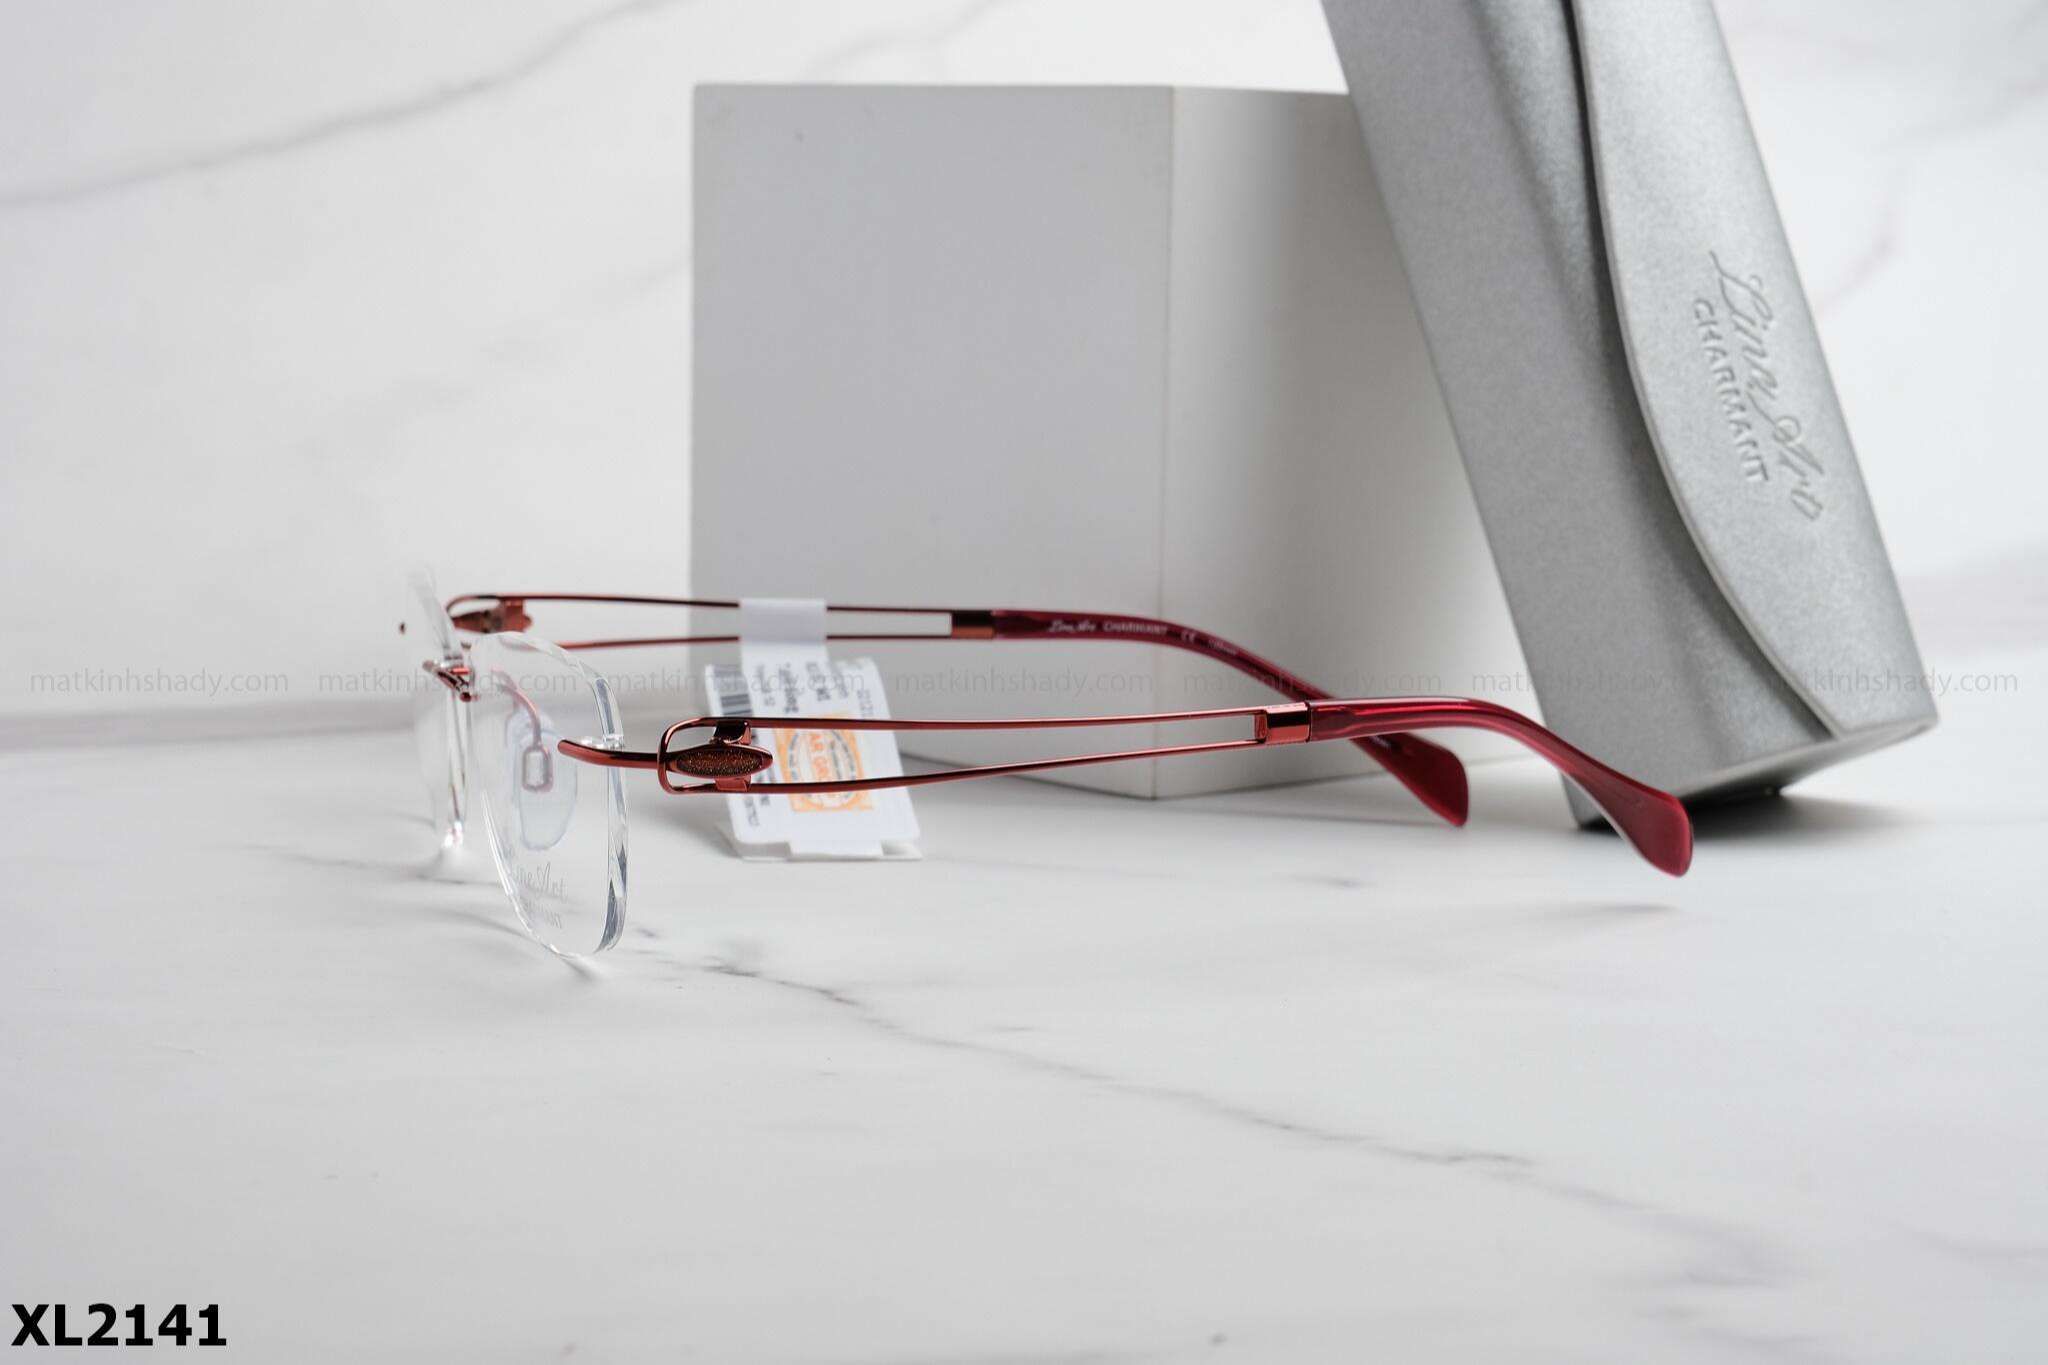  LINE ART CHARMANT Eyewear - Glasses - XL2141 